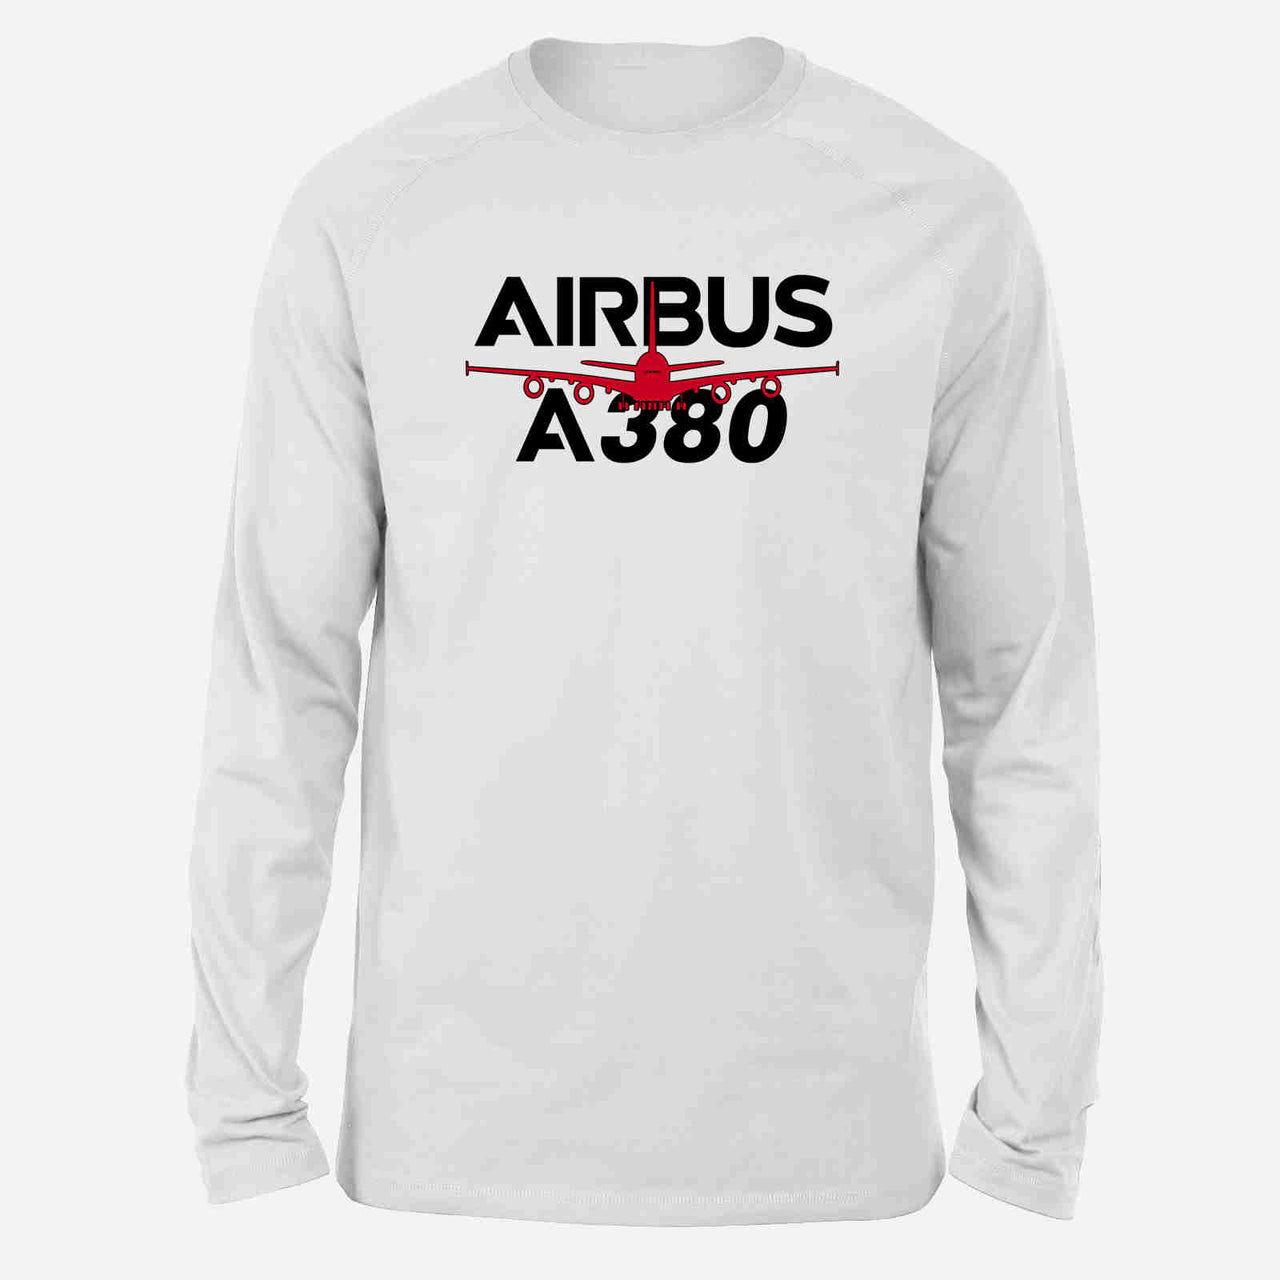 Amazing Airbus A380 Designed Long-Sleeve T-Shirts